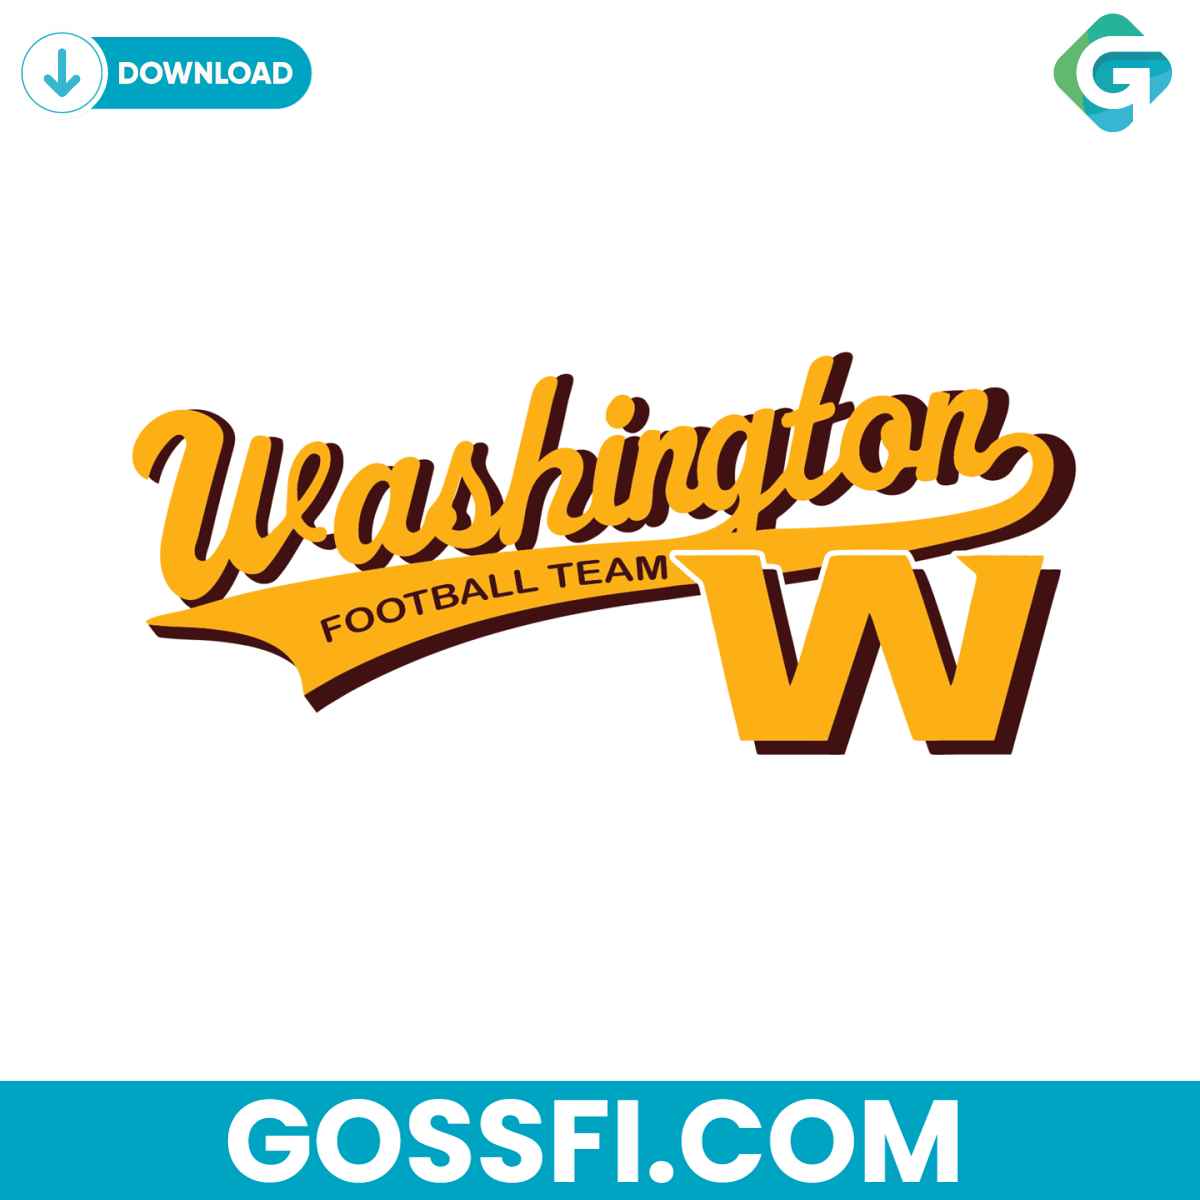 washington-football-team-logo-svg